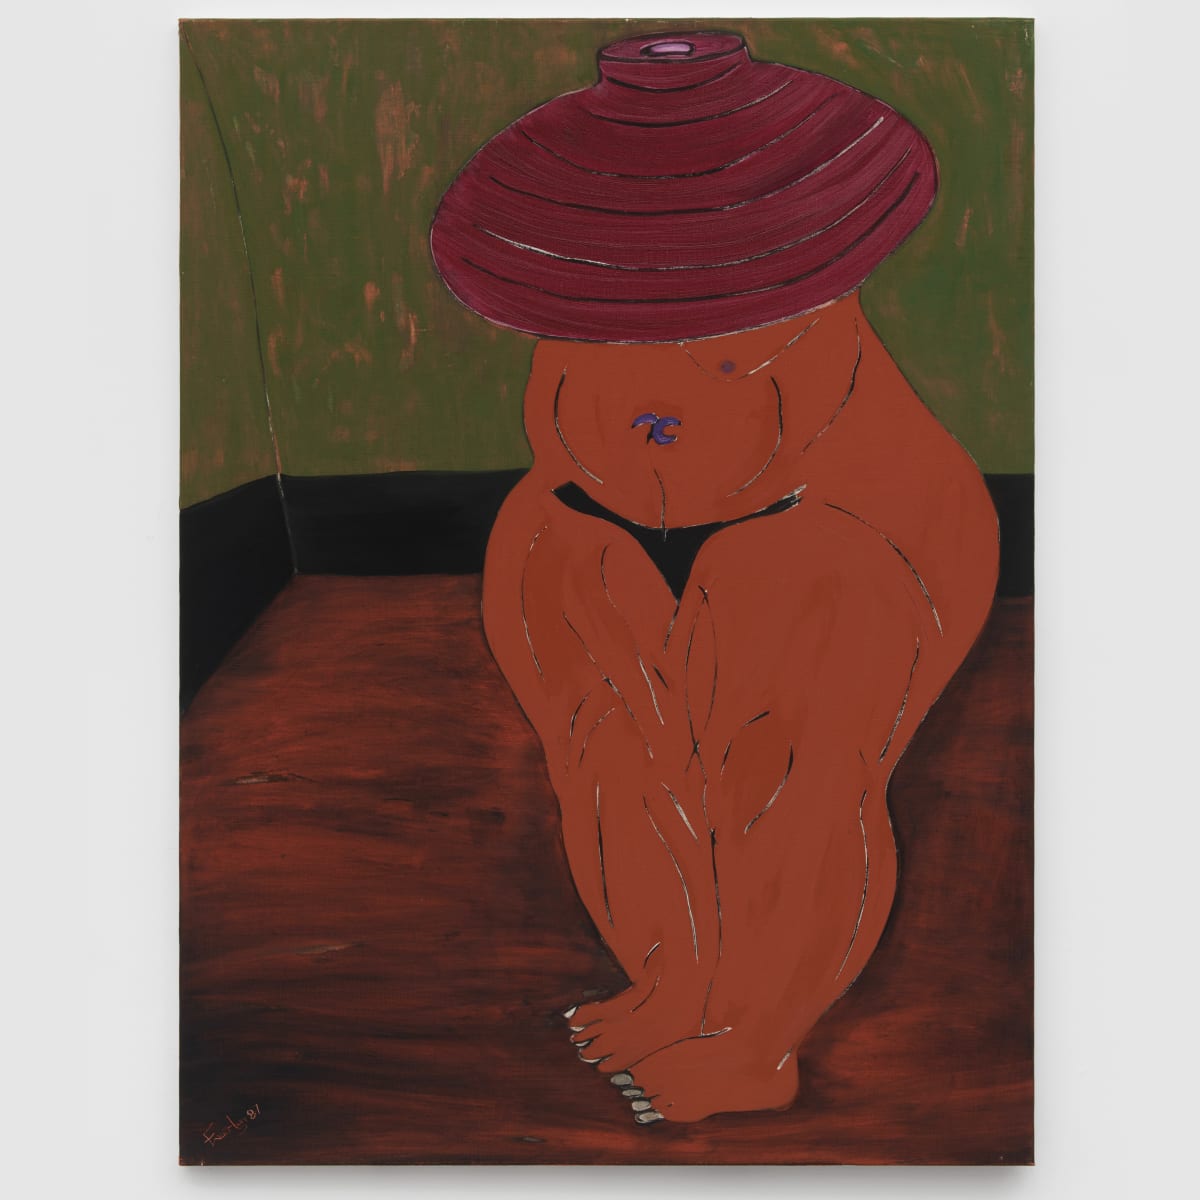 Everlyn NICODEMUS, Nue dans le chapeau [Nude in hat], 1987